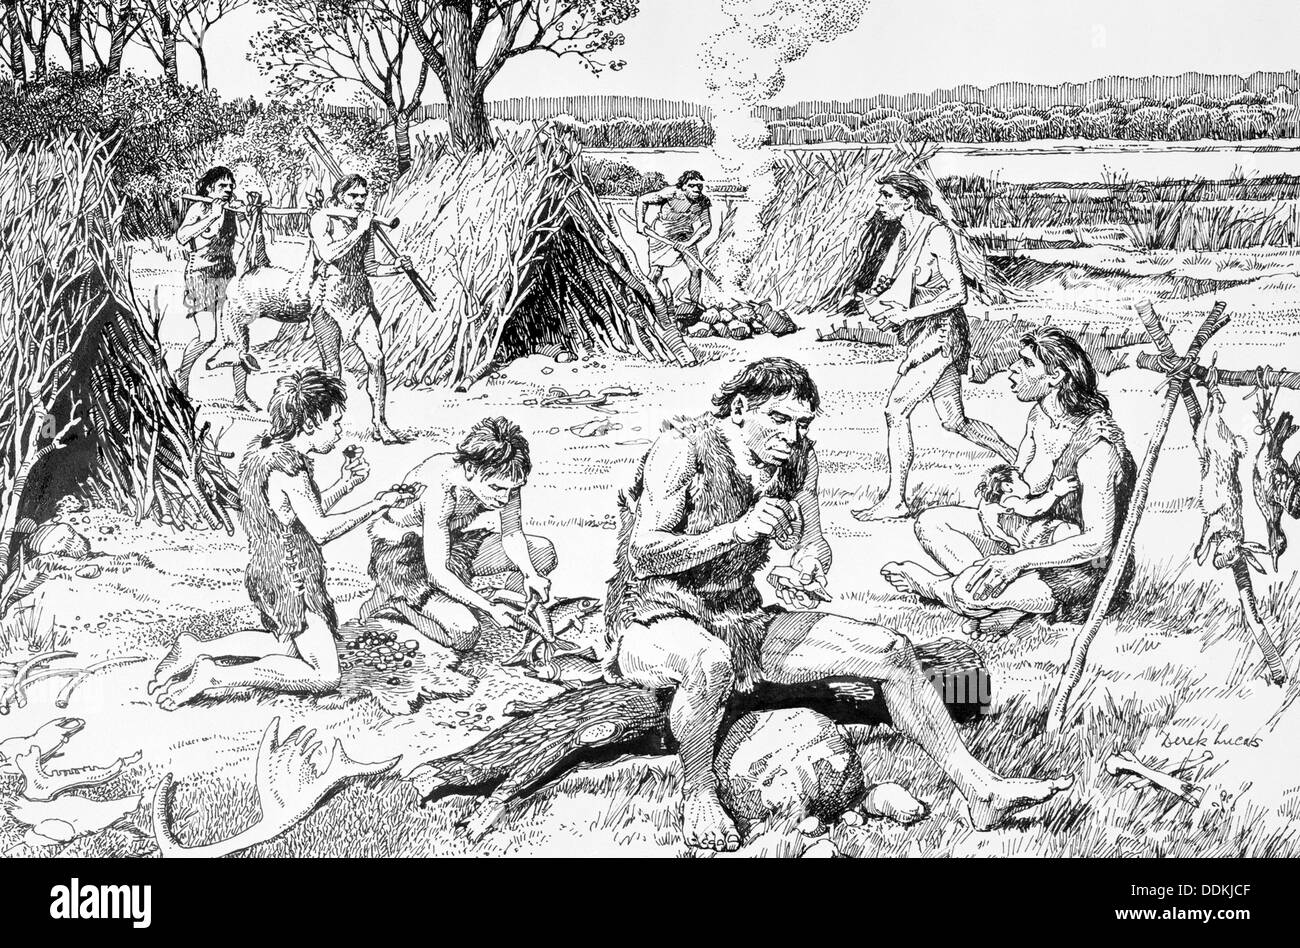 Popoli preistorici in un insediamento, Swanscombe, Kent, c350,000 BC. Artista: Derek Lucas Foto Stock